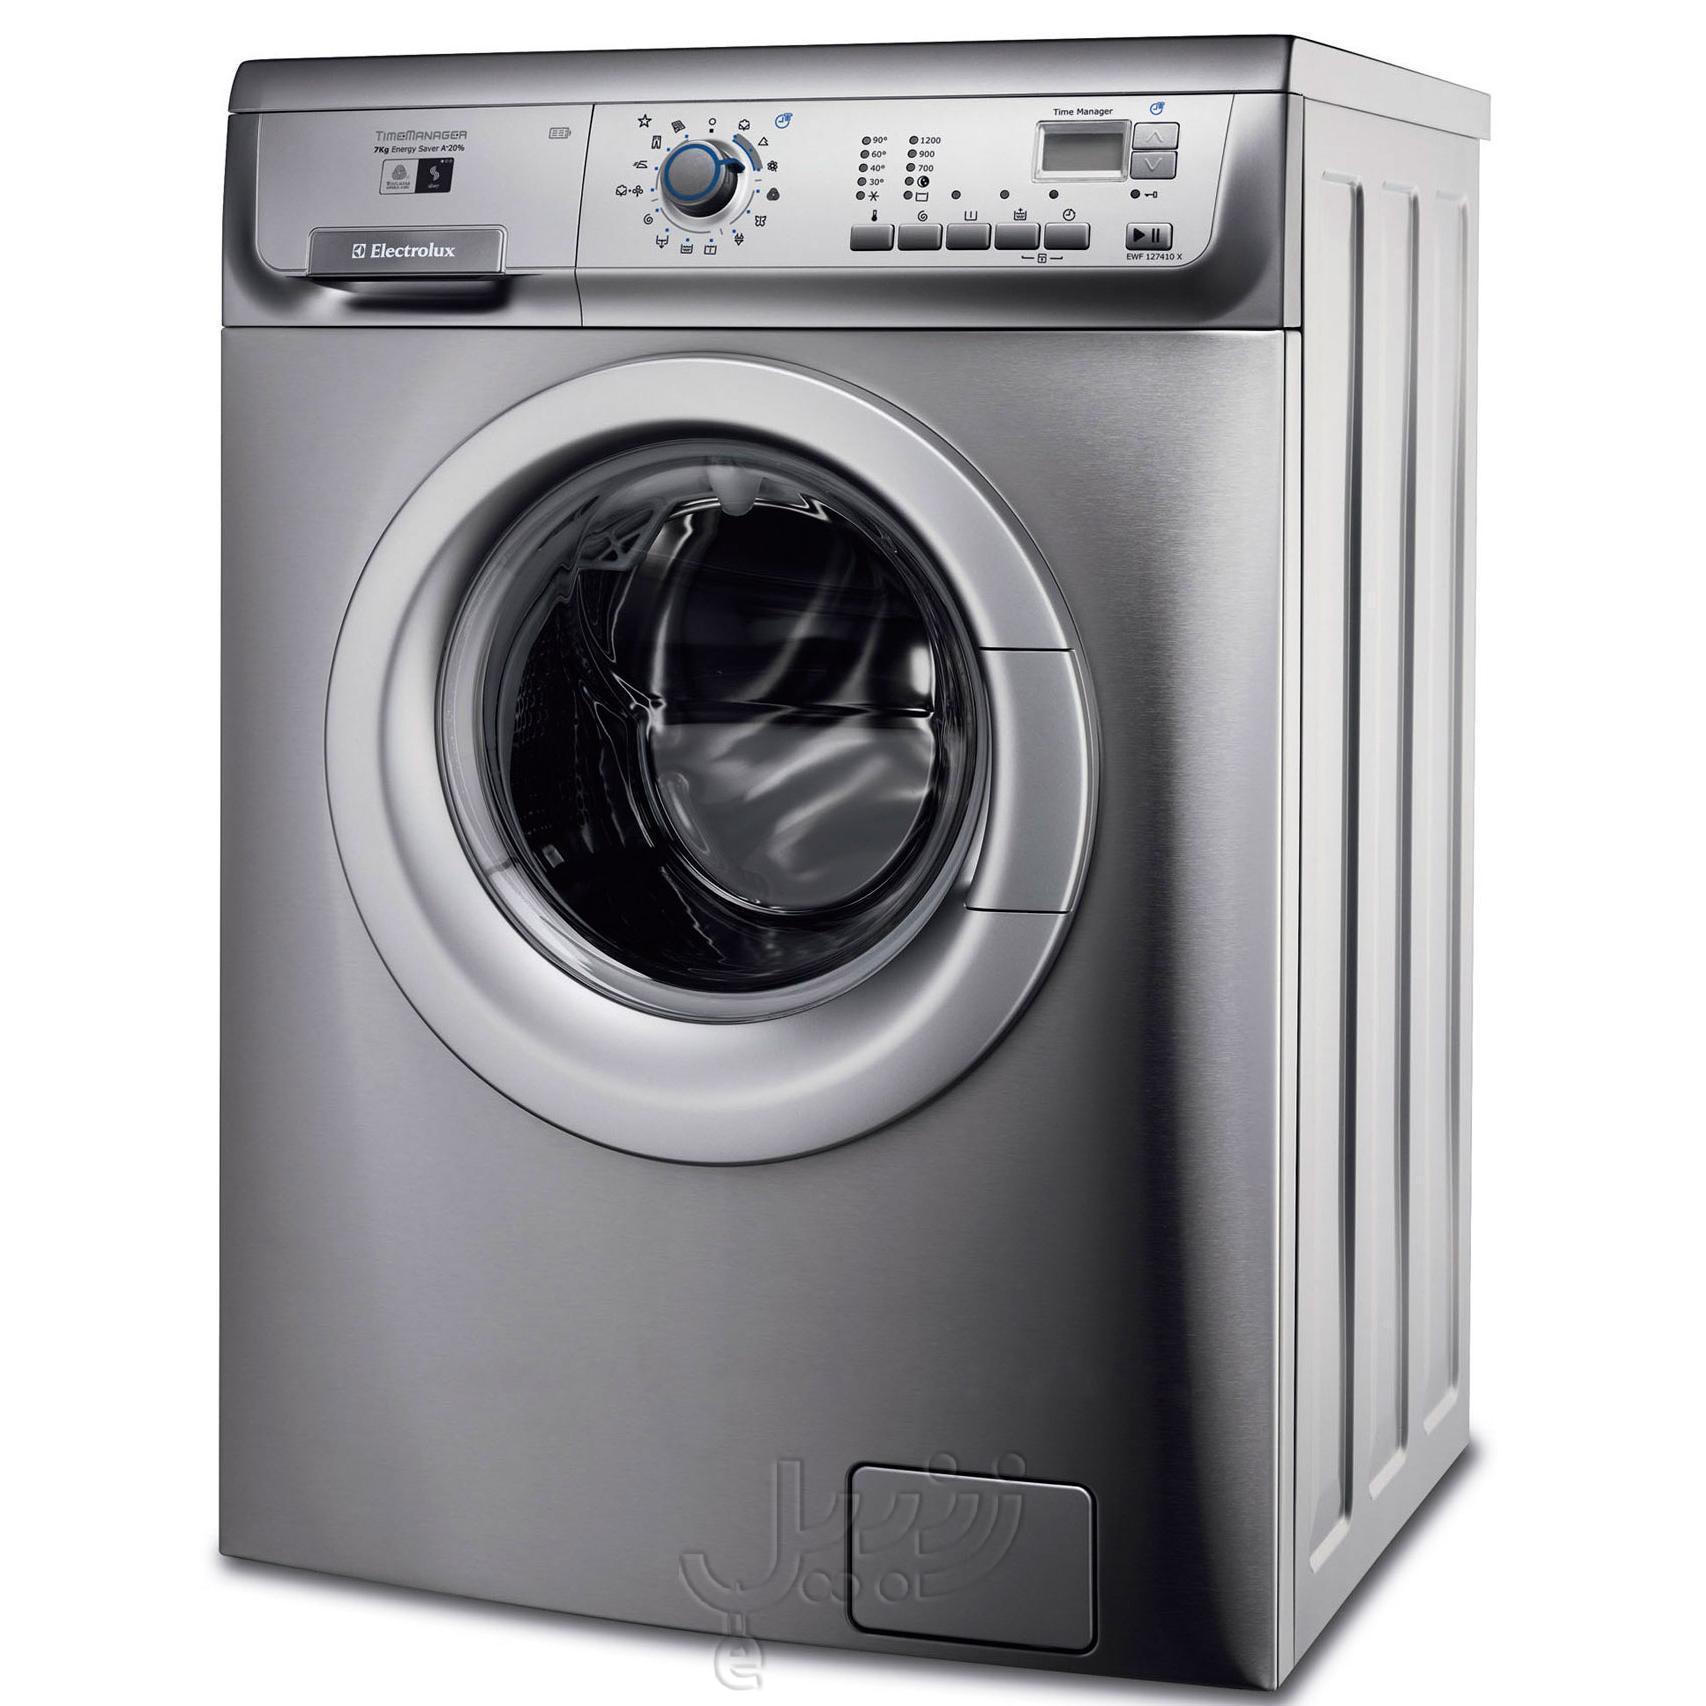 Бытовая техника стиральная машинка. Стиральная машинка LG wp 890 Rp. Стиральная машина beko6506d. Electrolux EWF 1050. 80 Wash стиральная машина.